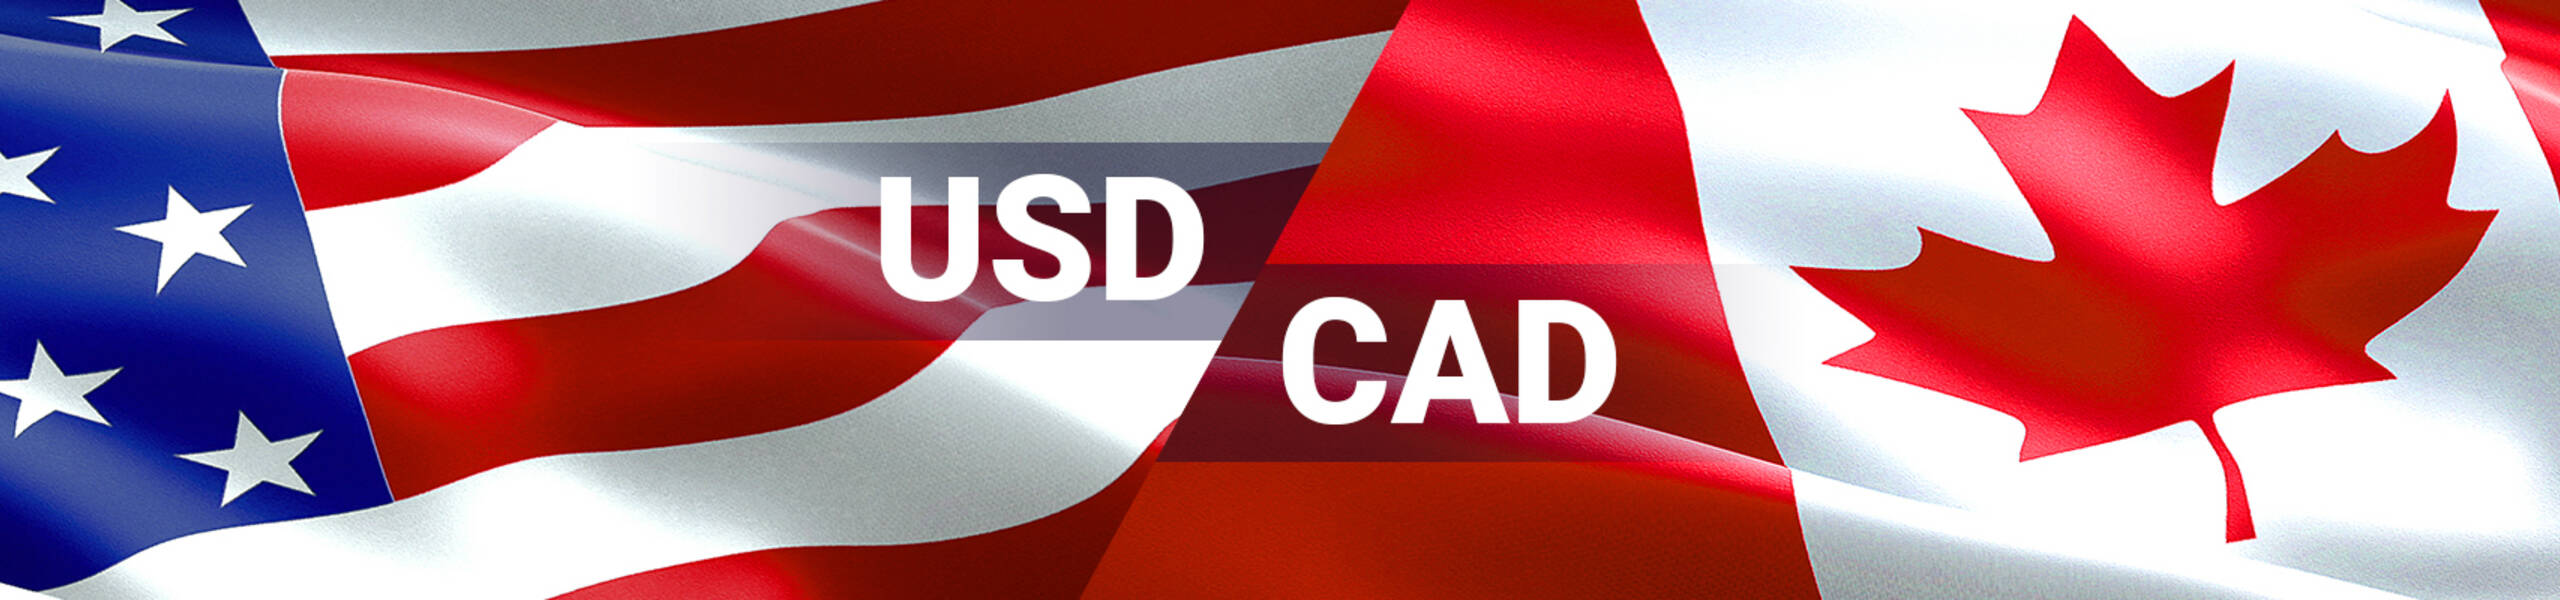 USD/CAD Trade Signal 2017/10/19